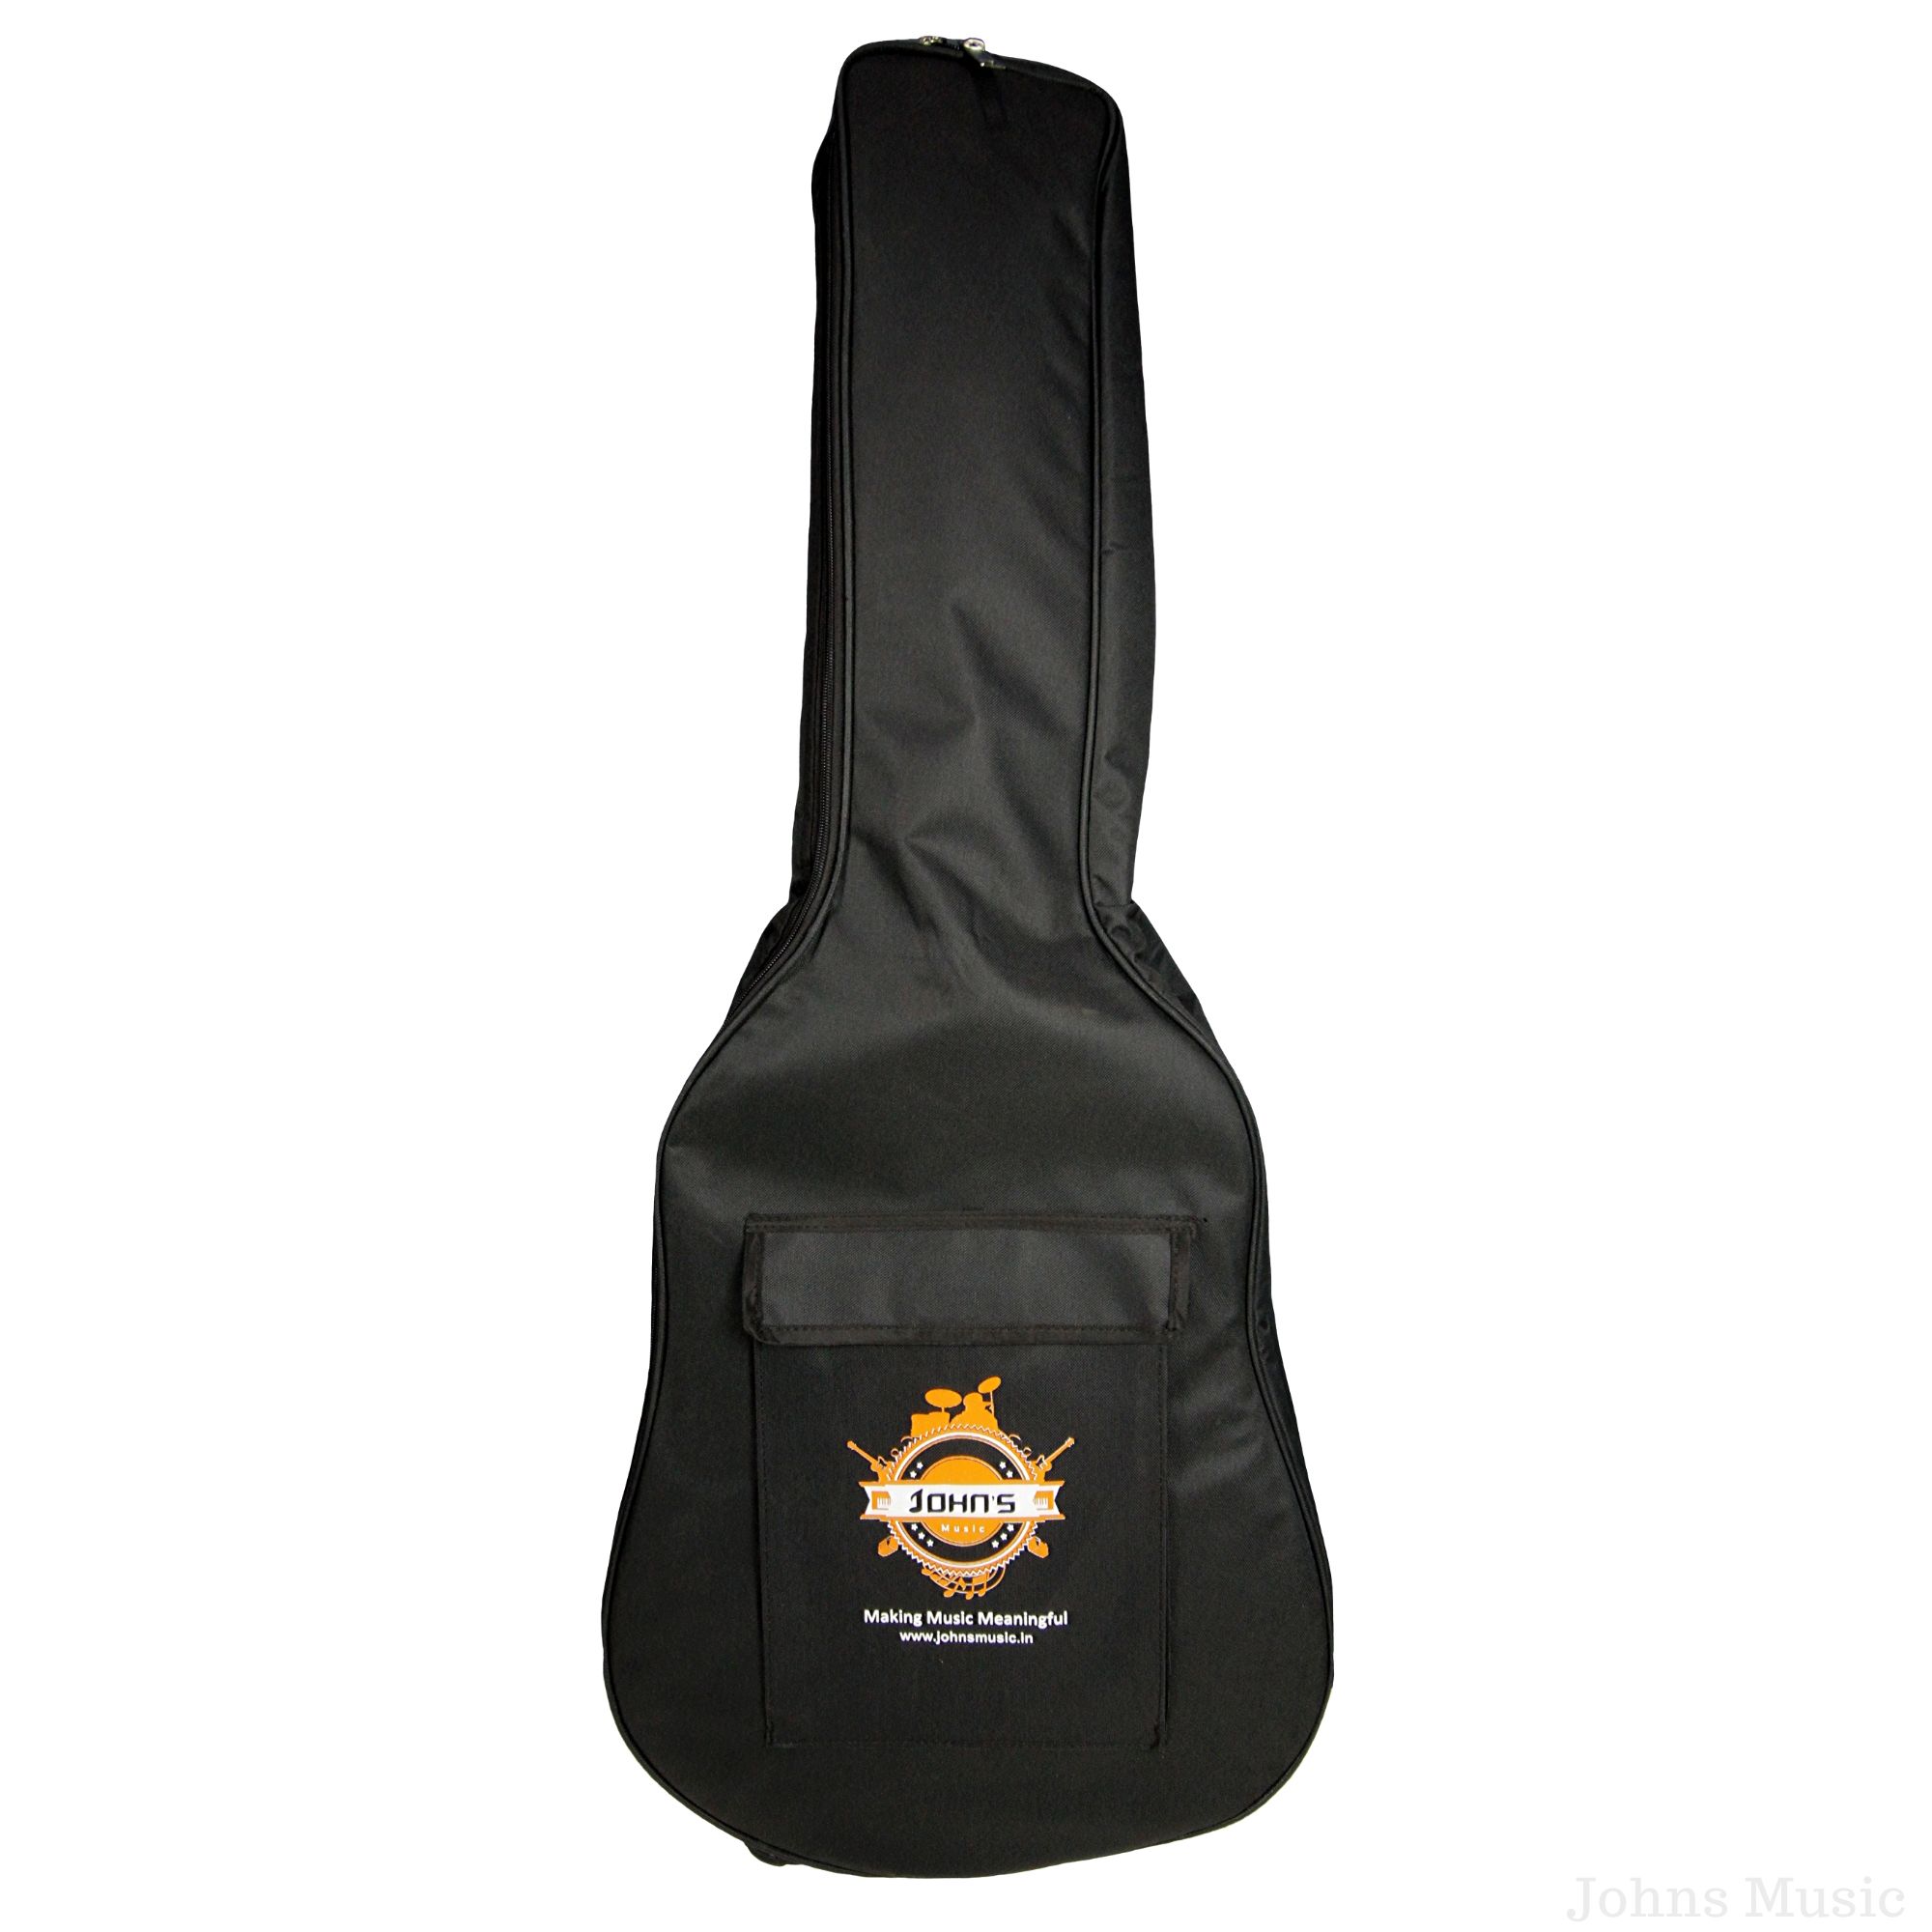 Yamaha F310 Dreadnought Acoustic Guitar with Padded Bag and Pics - Natural